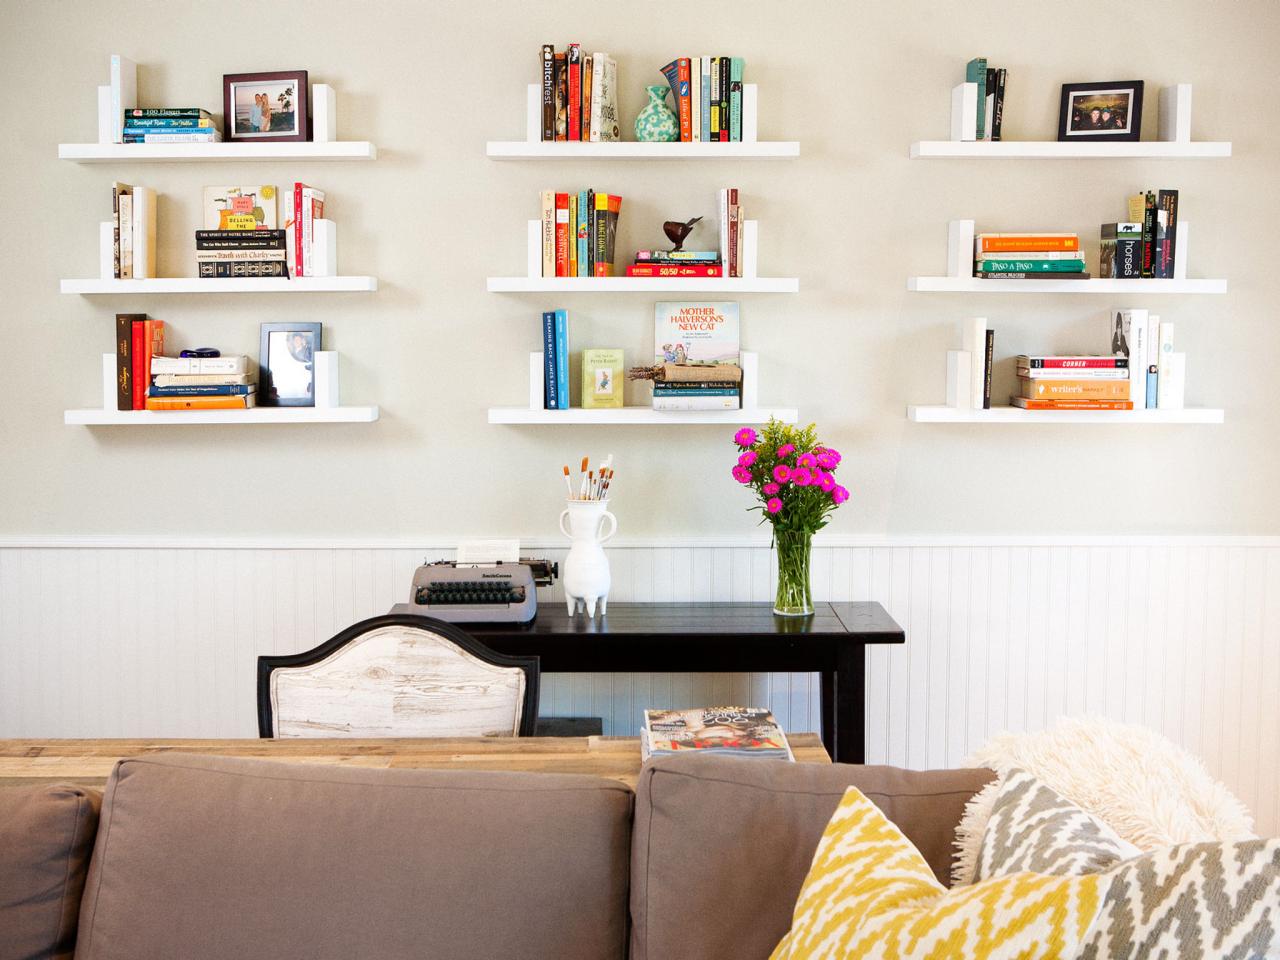 12 Ways To Decorate With Floating Shelves Hgtv S Decorating Design Blog Hgtv